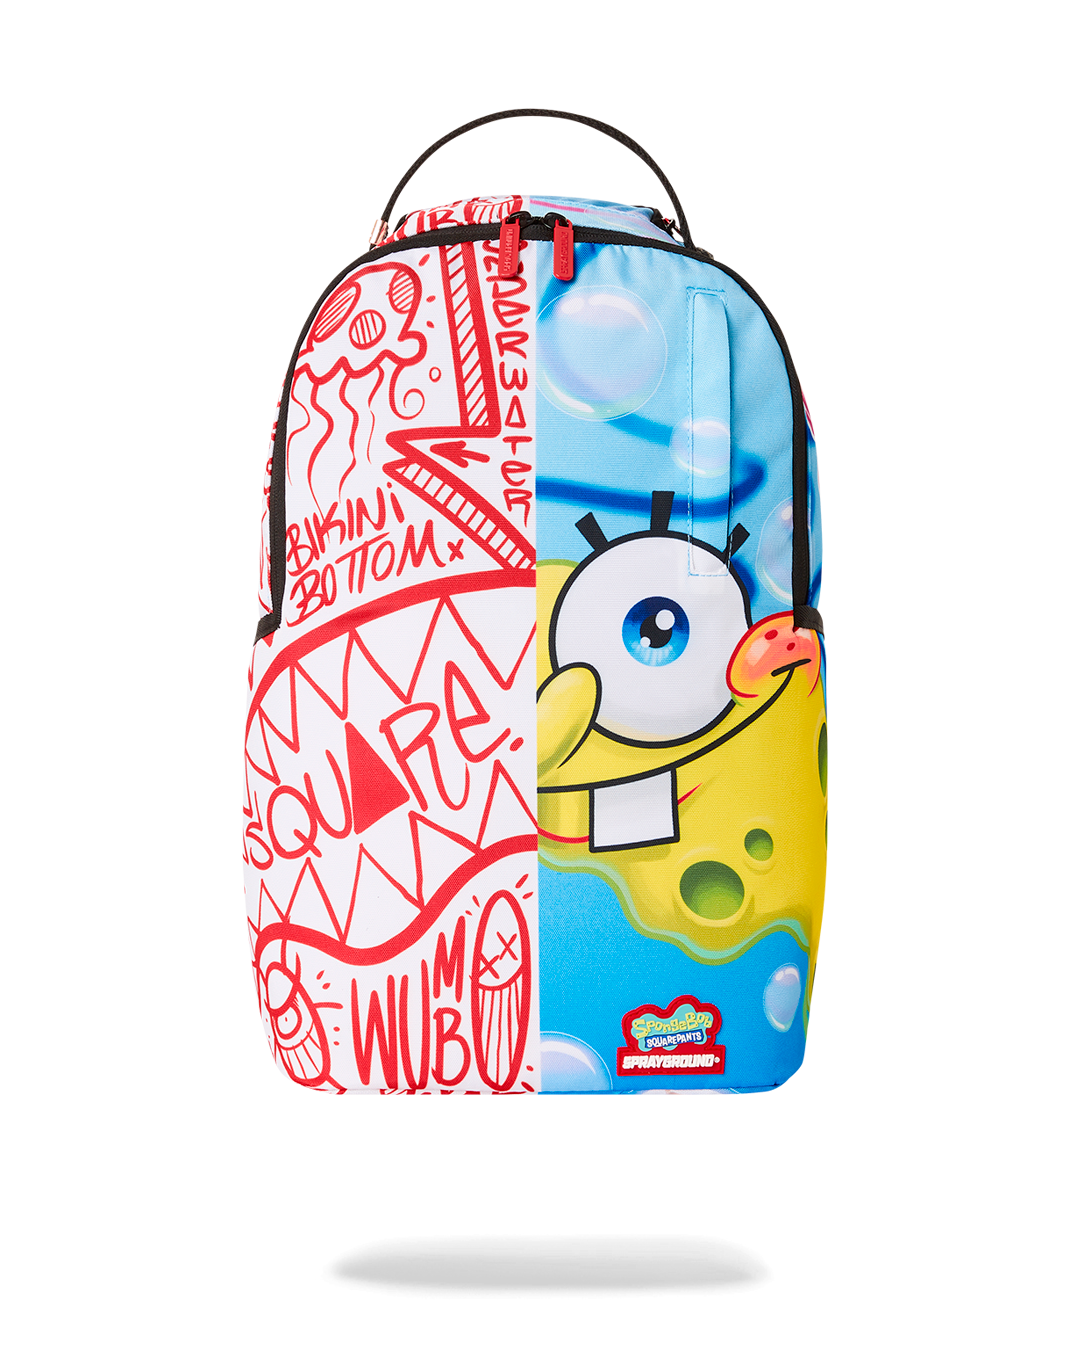 SprayGround Spongebob or TMNT Backpacks